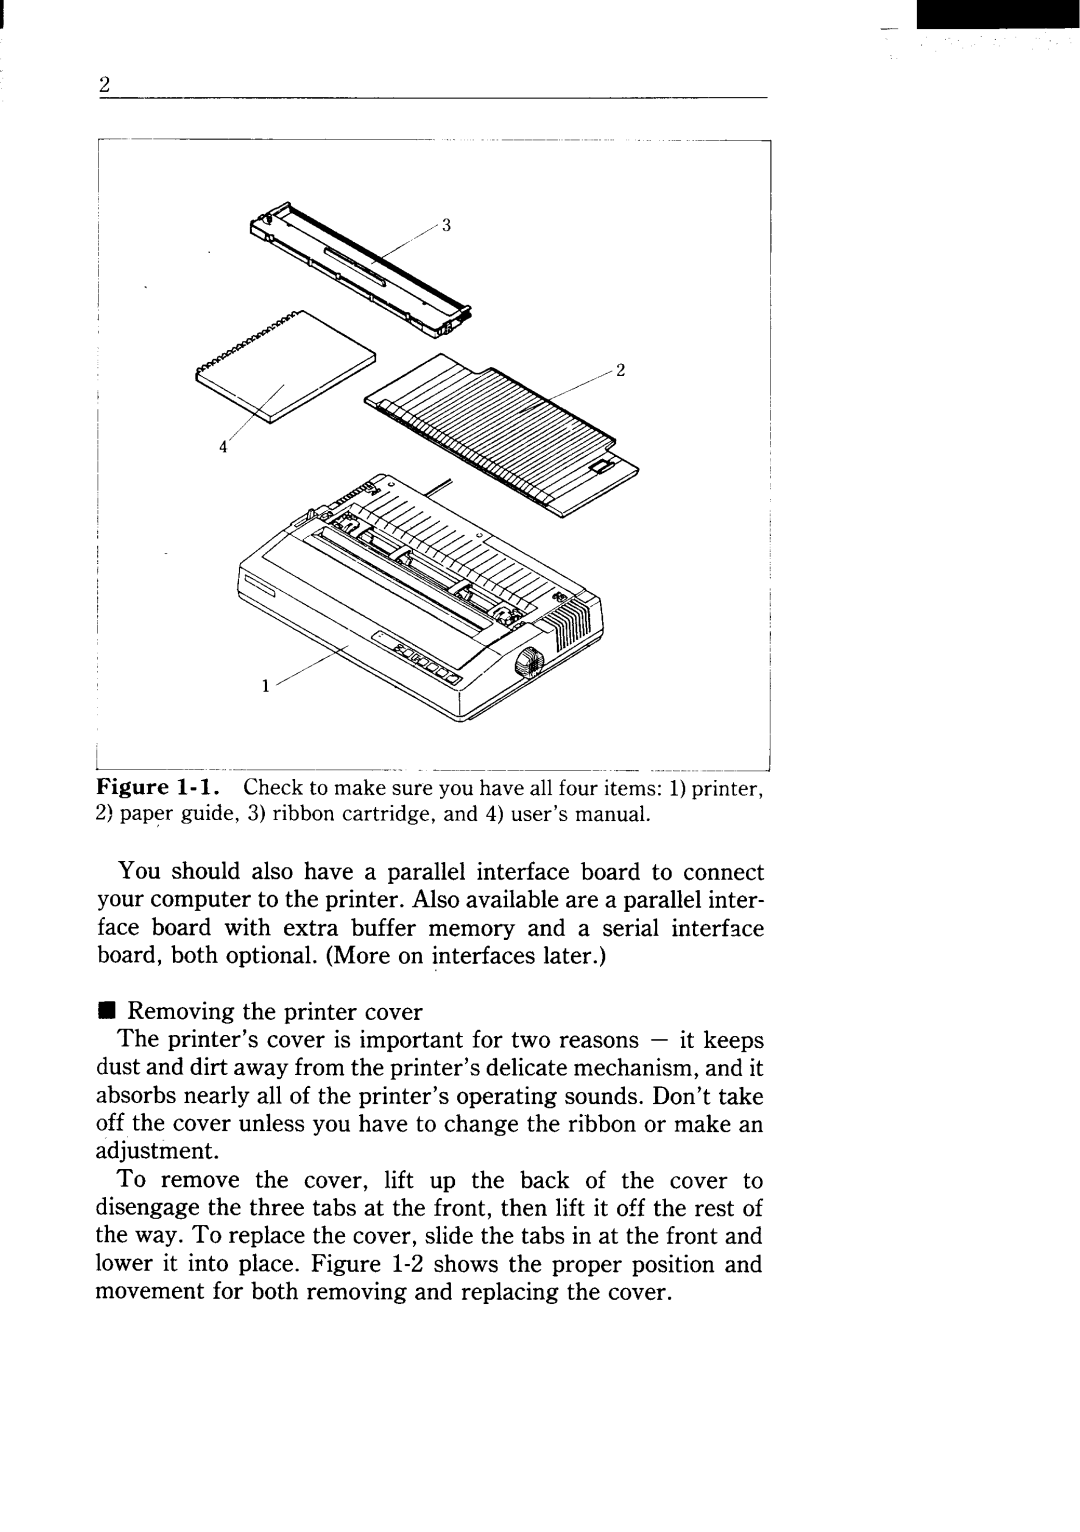 Star Micronics NX-15 user manual Removing the printer cover 